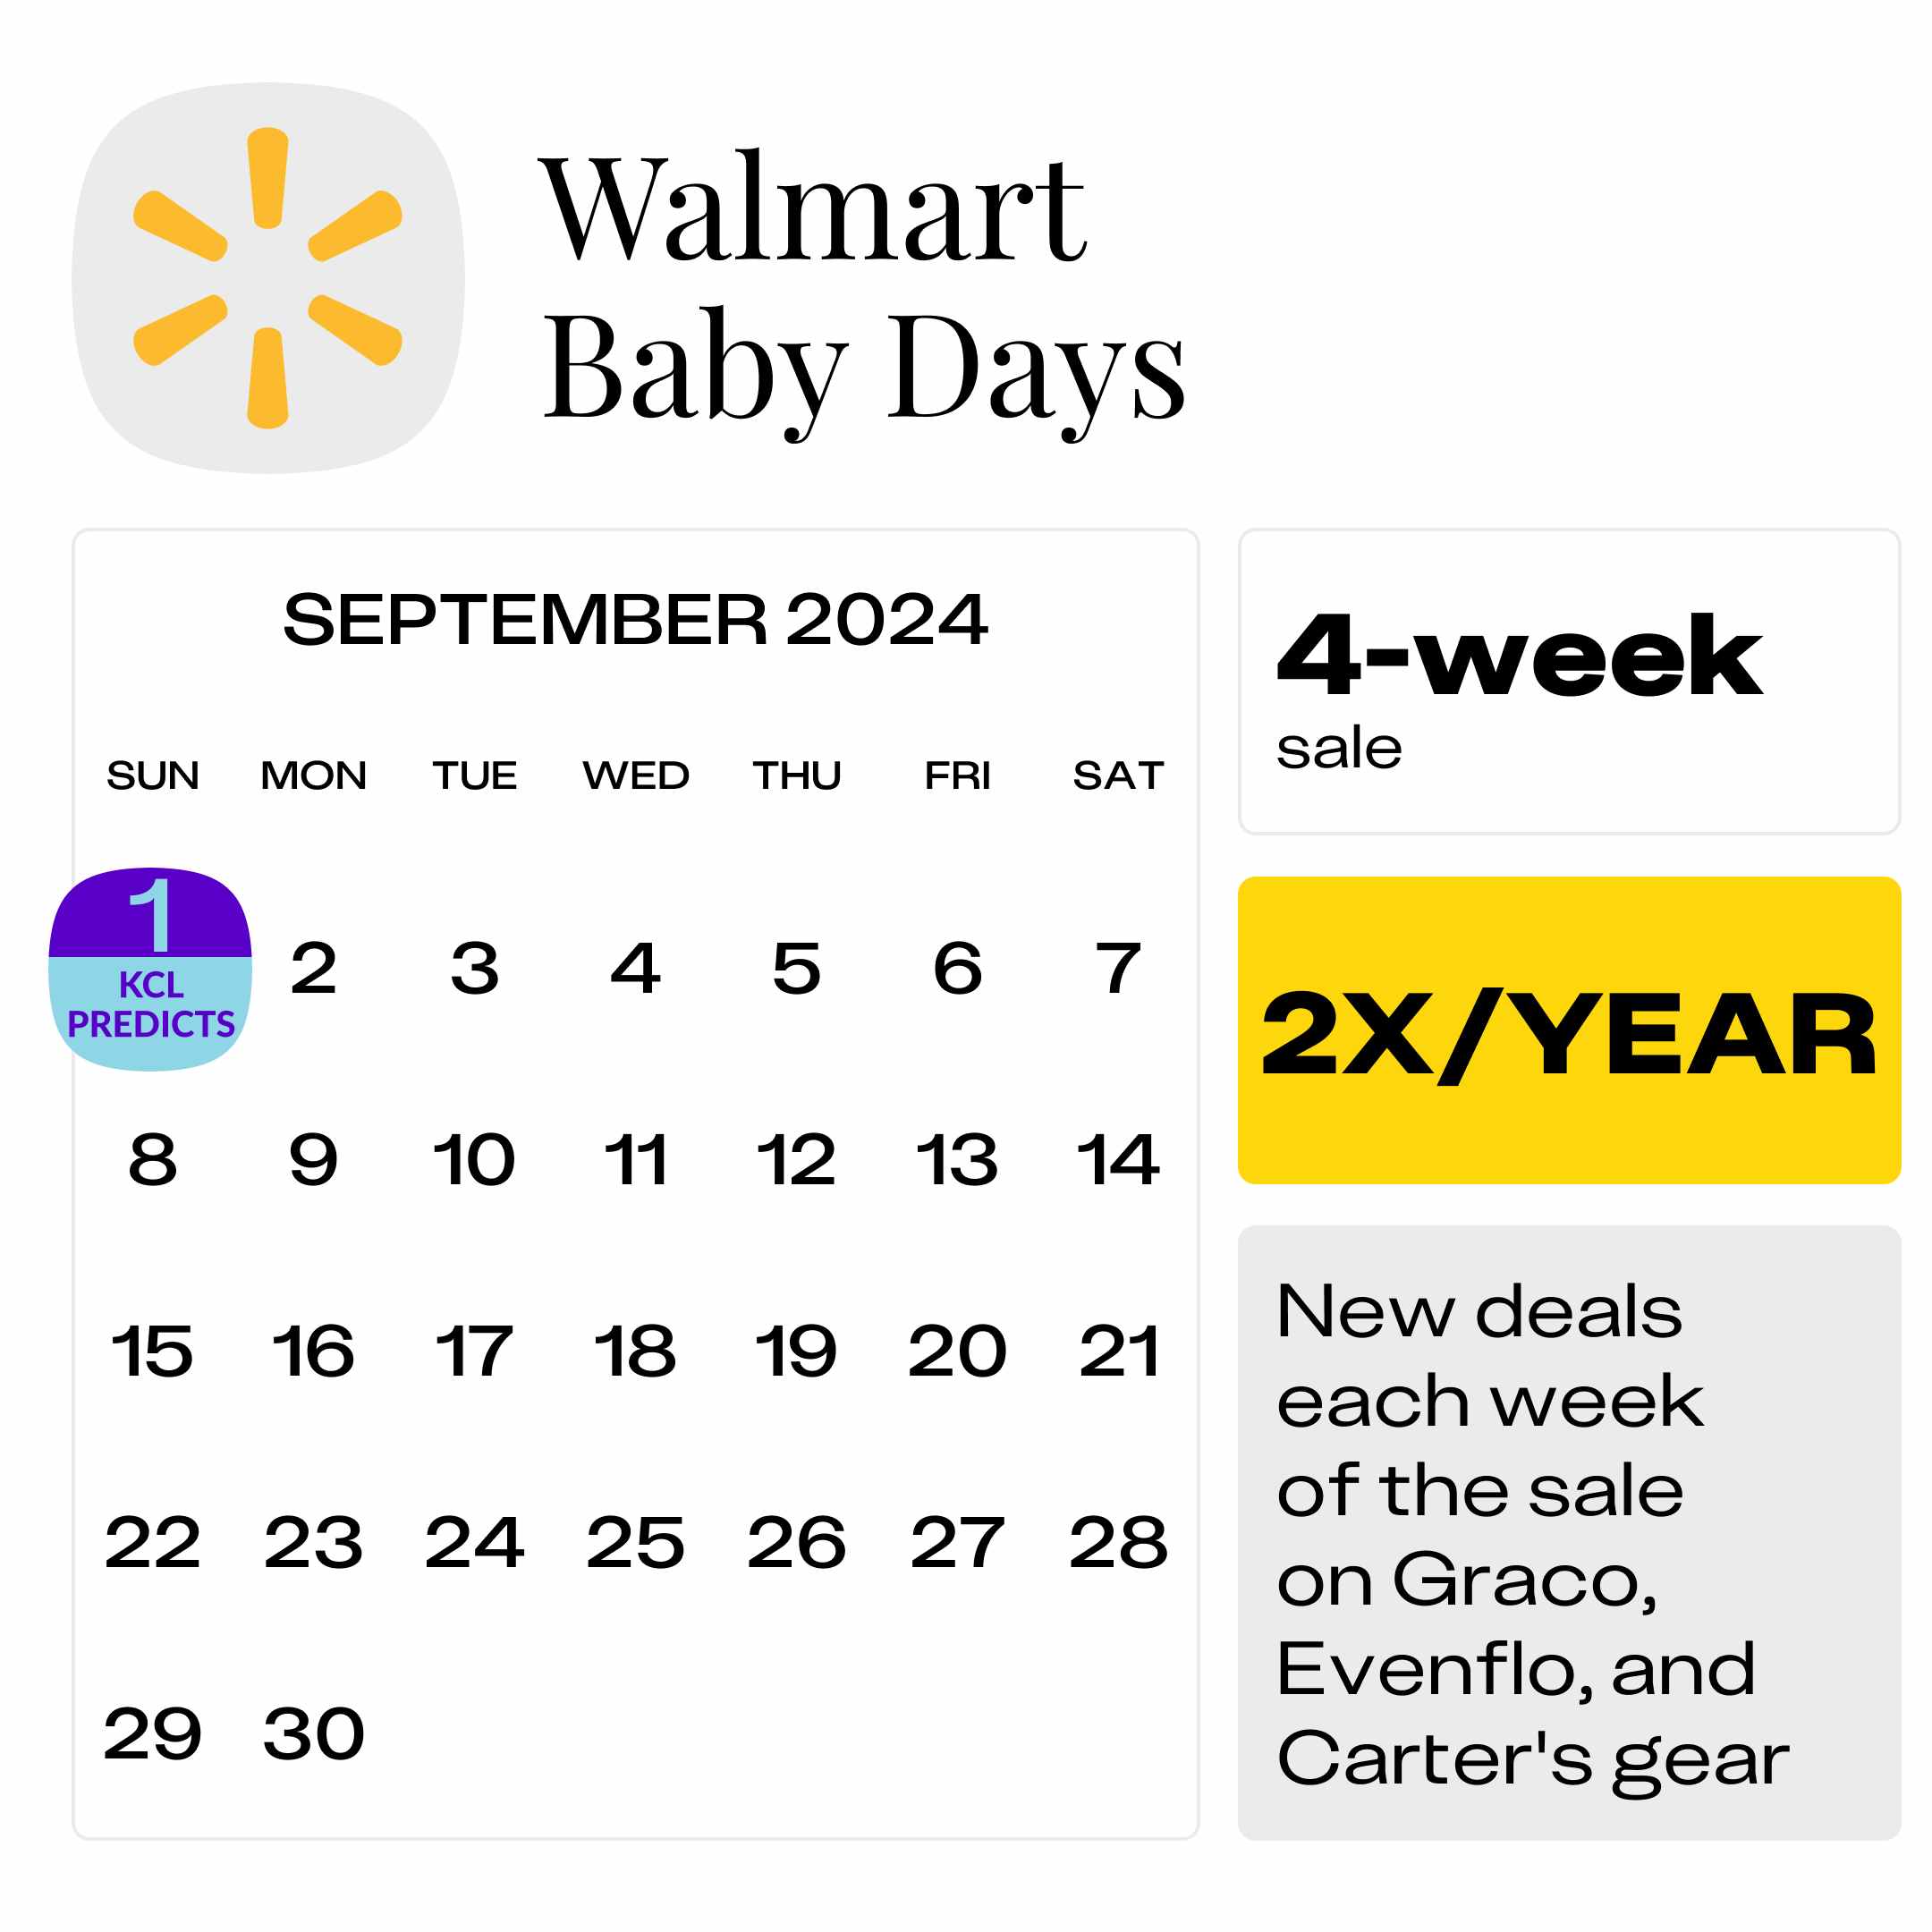 Walmart Baby Days sale start date prediction for September 2024.